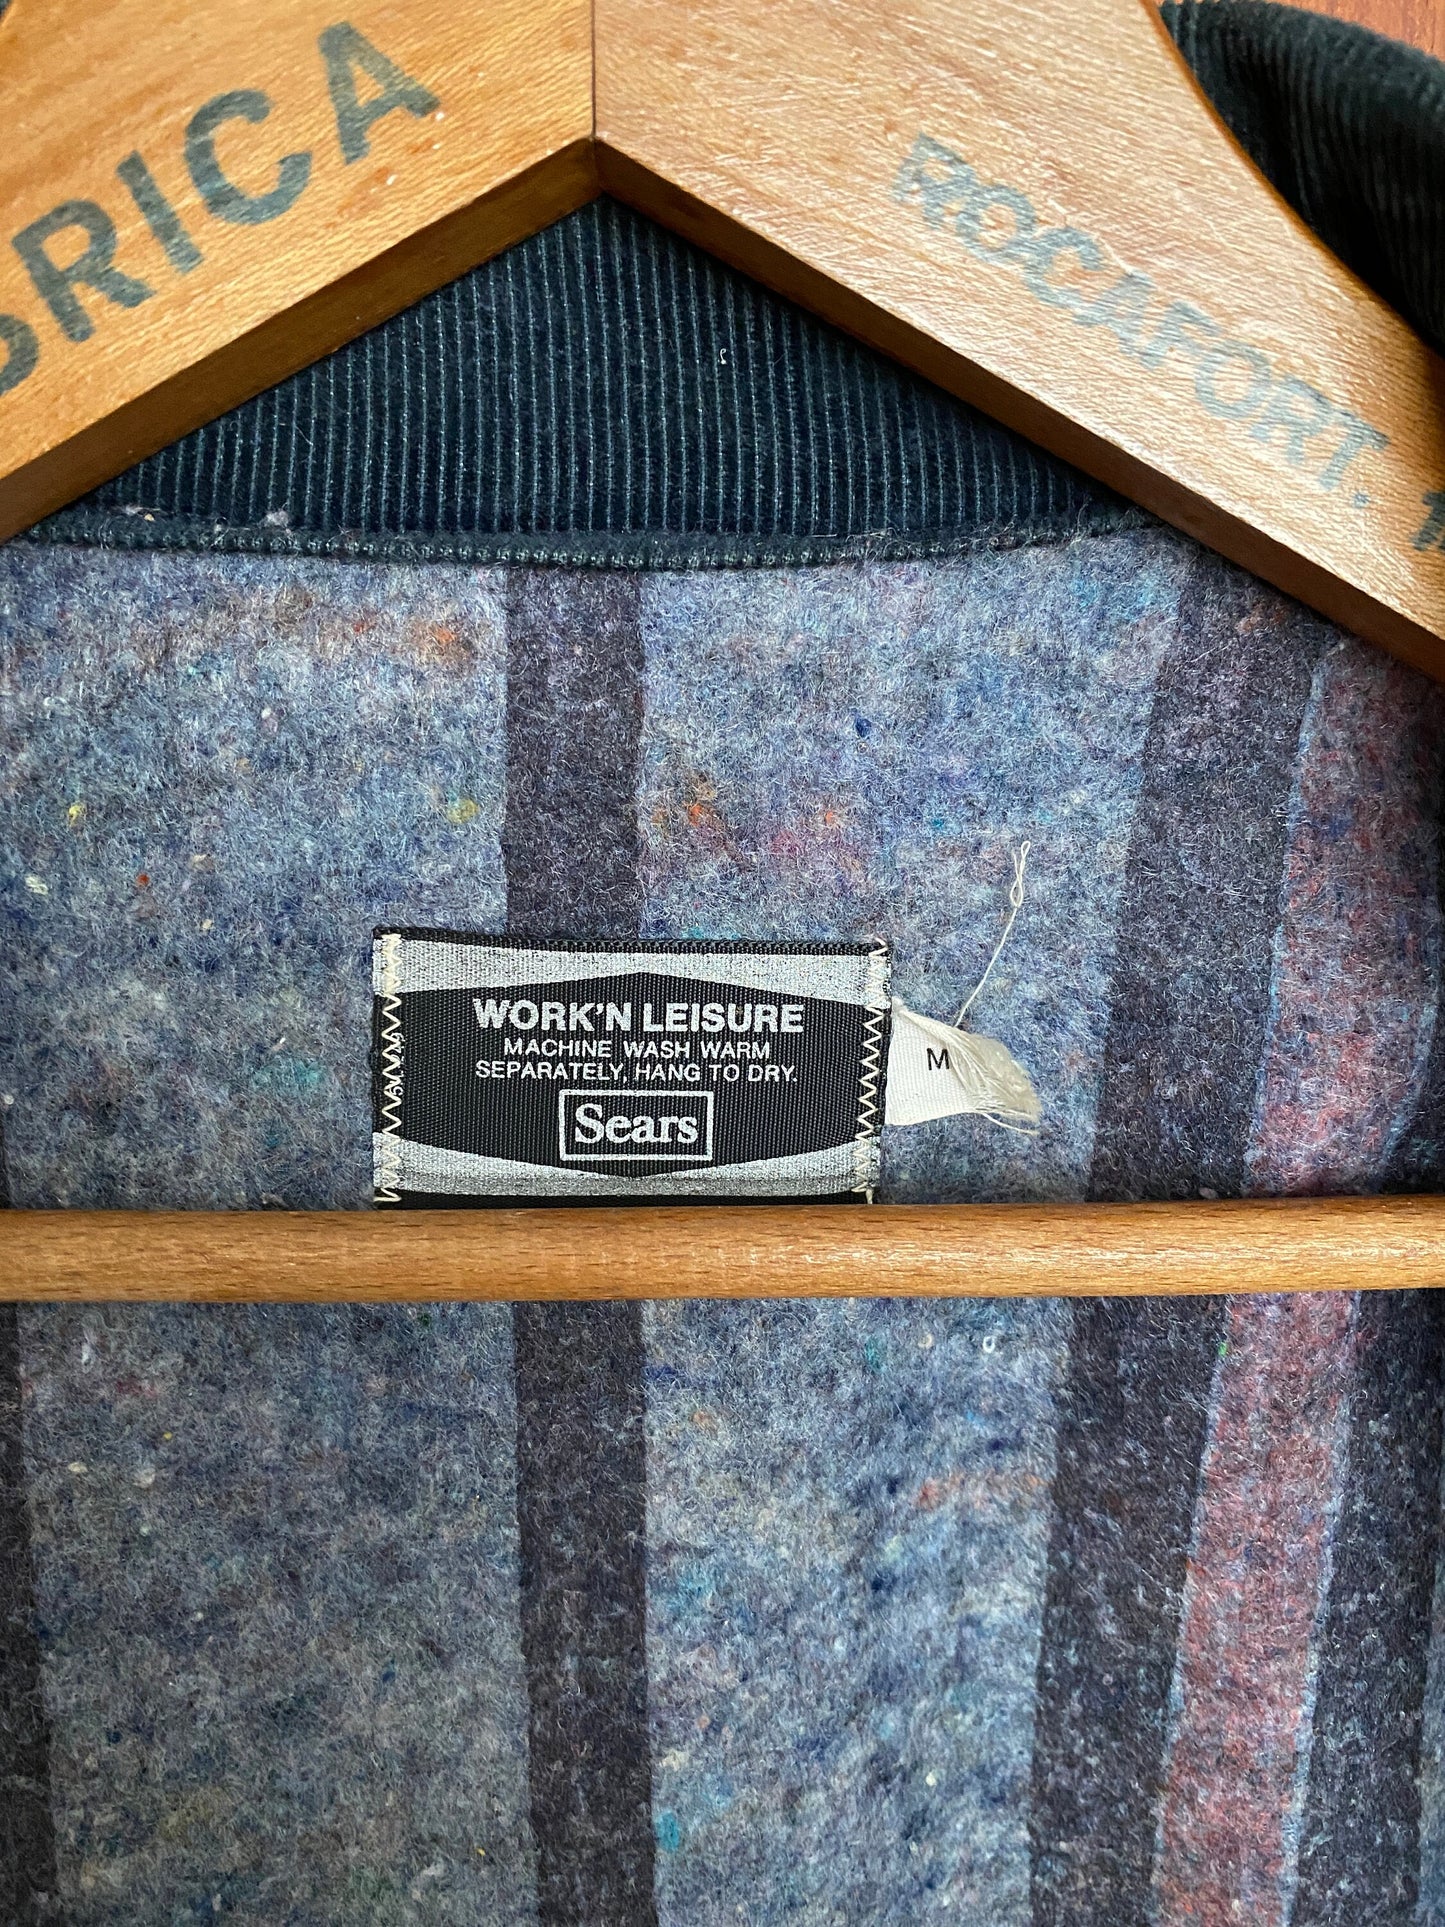 Size Med Tall. Vintage Sears denim Chore Lined coat Jacket